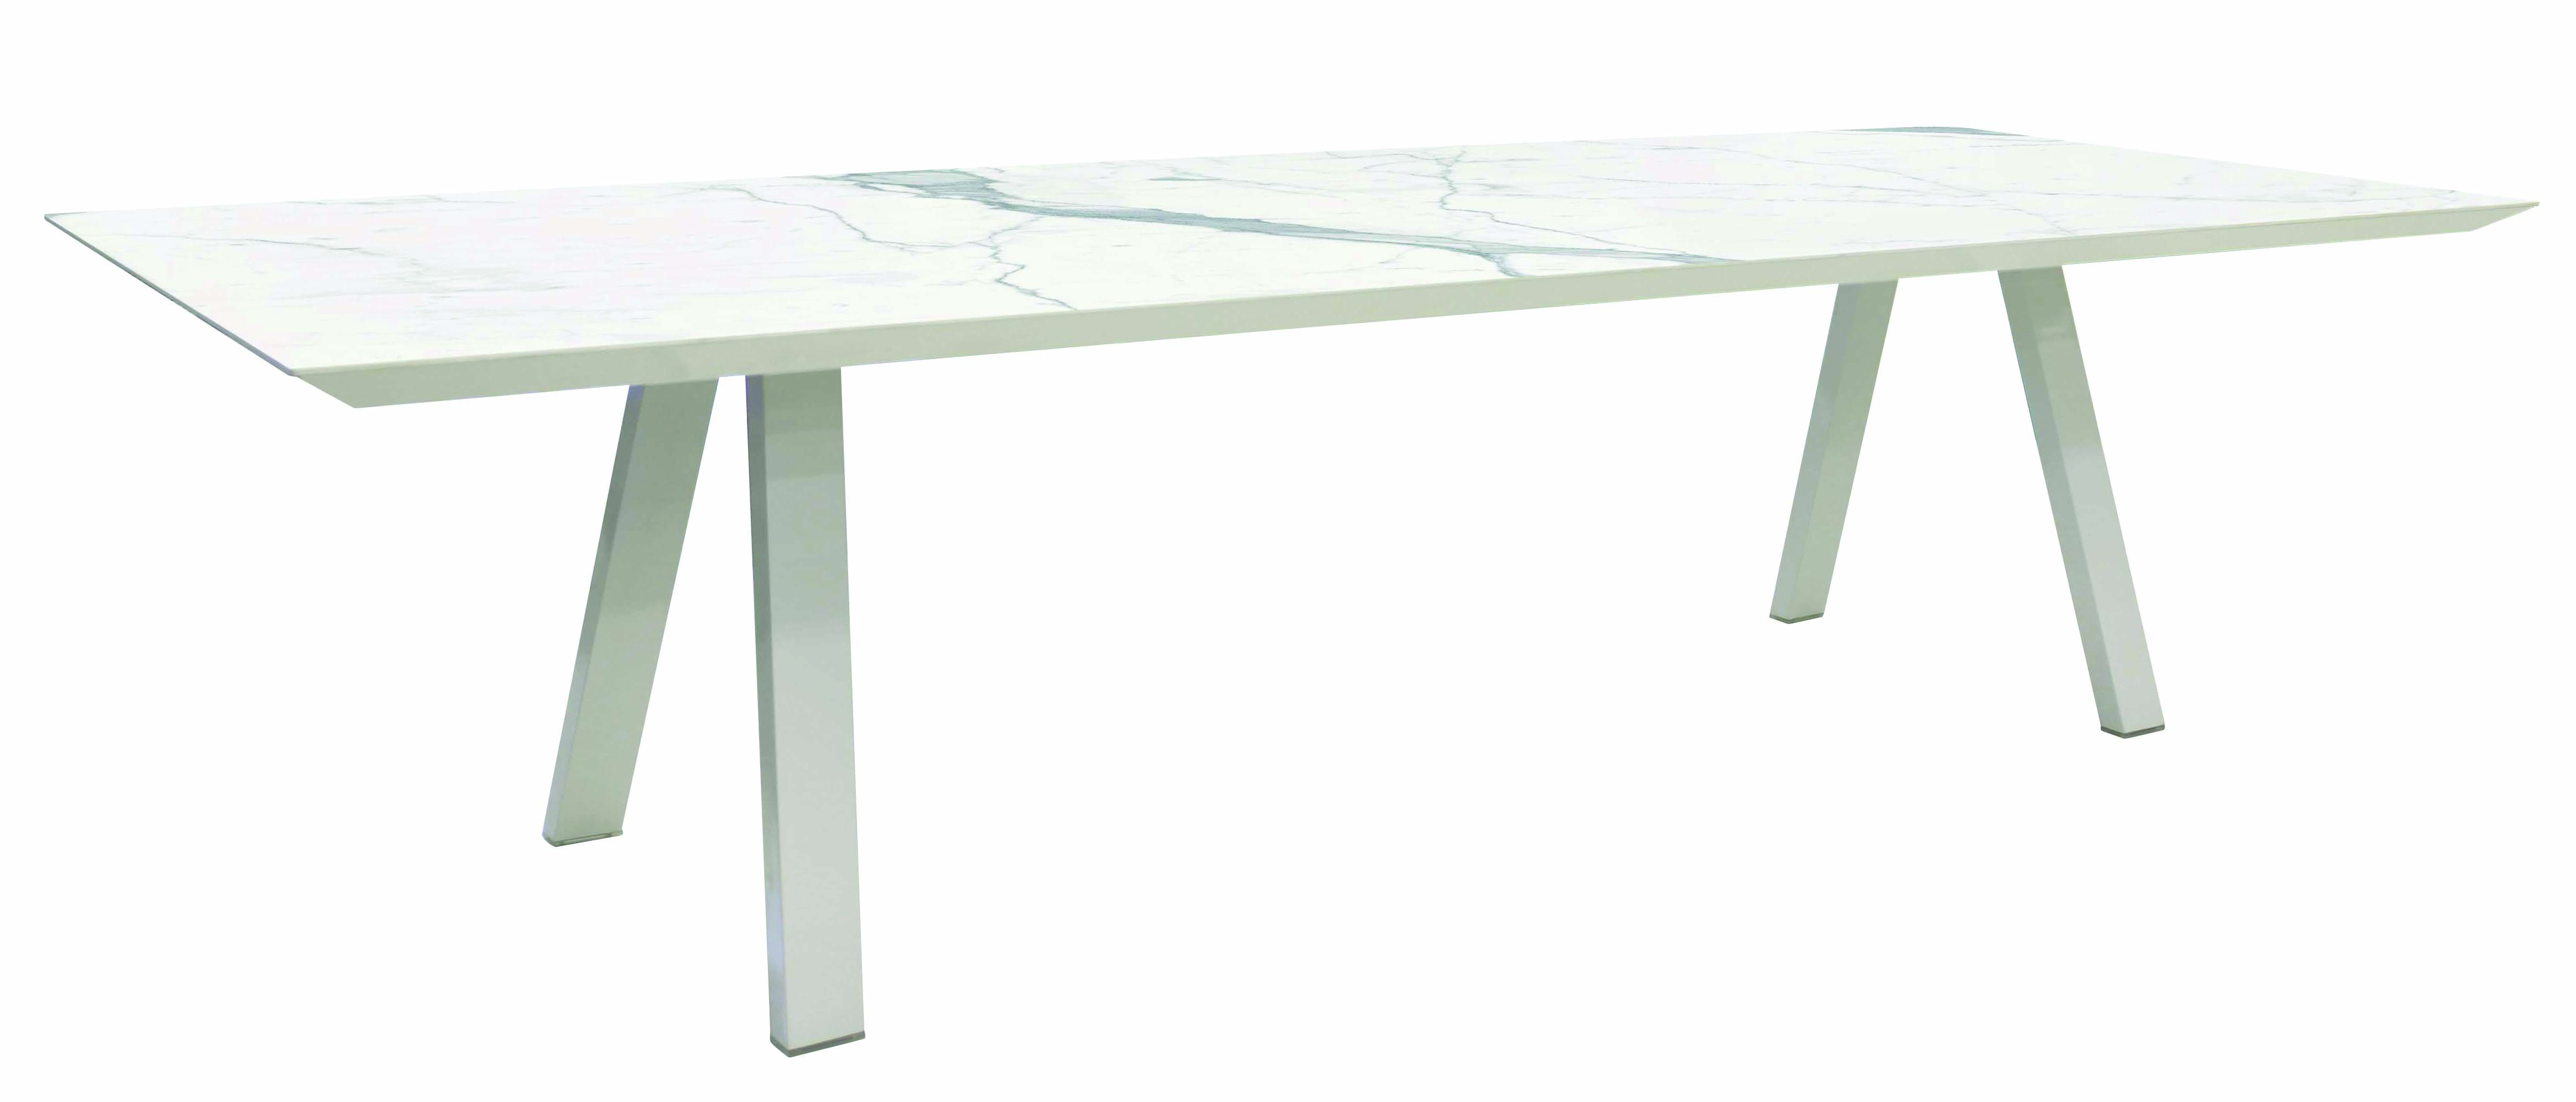 Lumor dining table - white